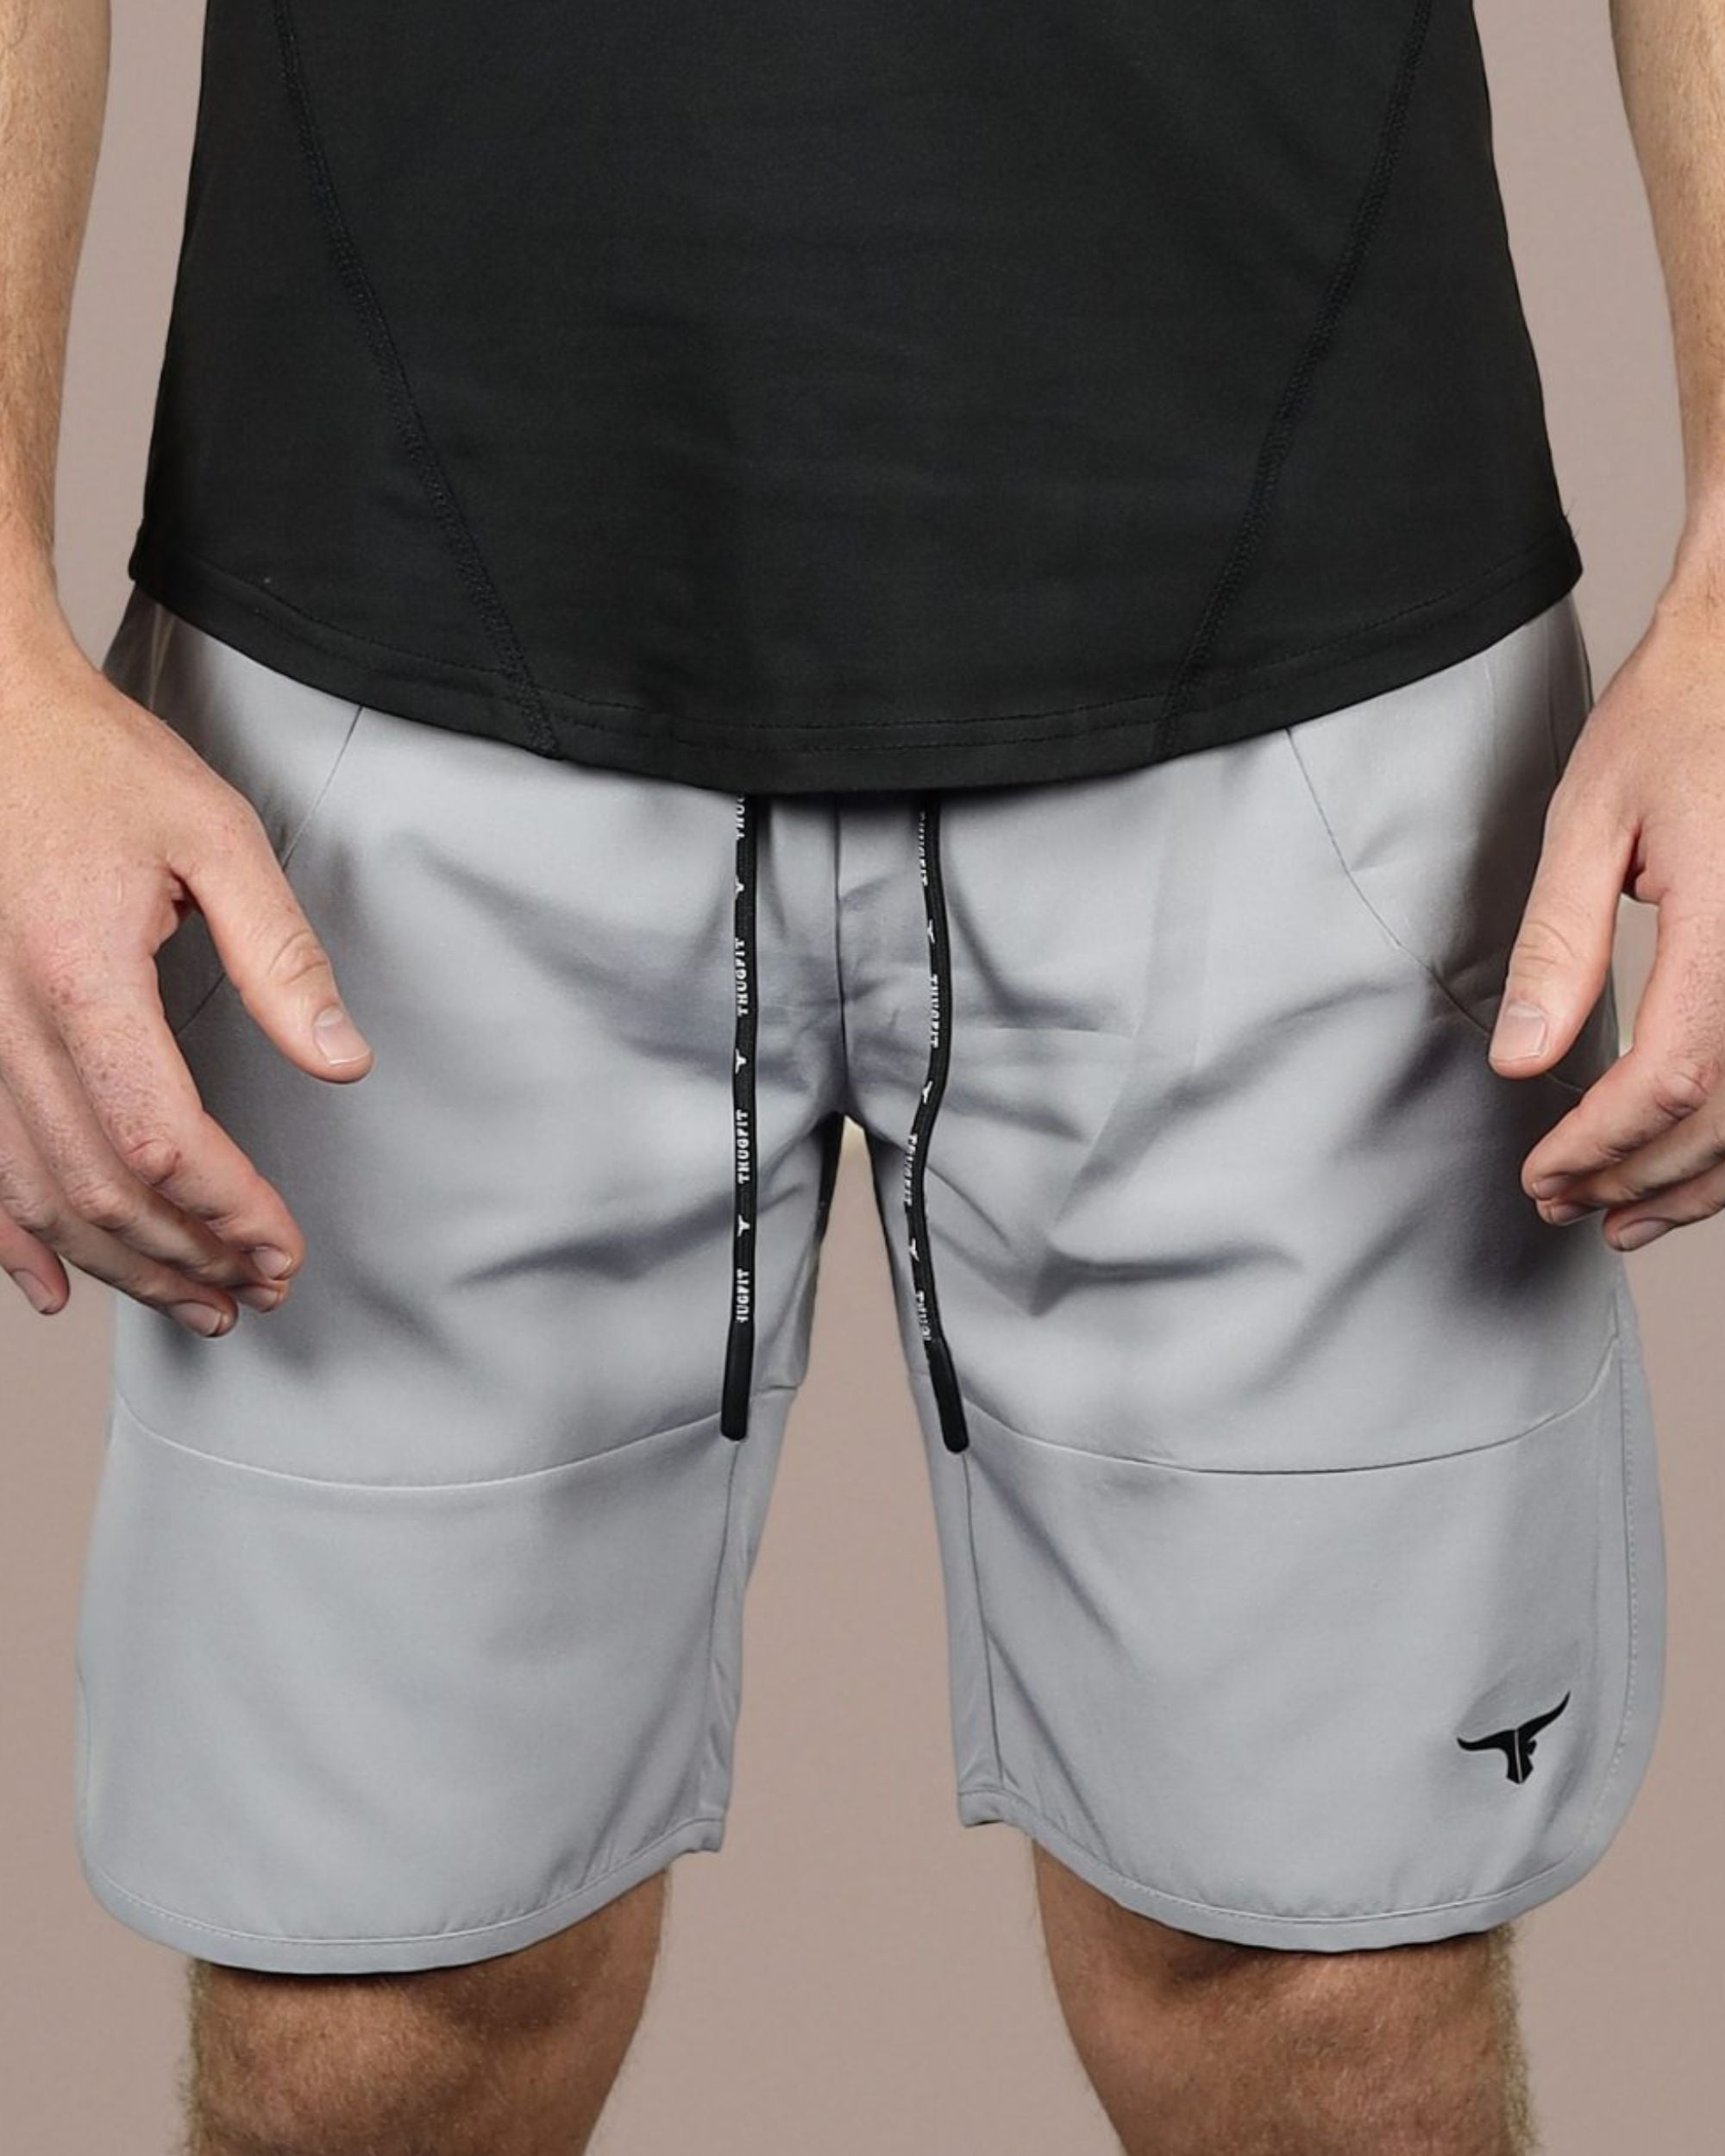 THUGFIT BlackHawk High-performance Men's Shorts (9" Inseam) - Gray - THUGFIT